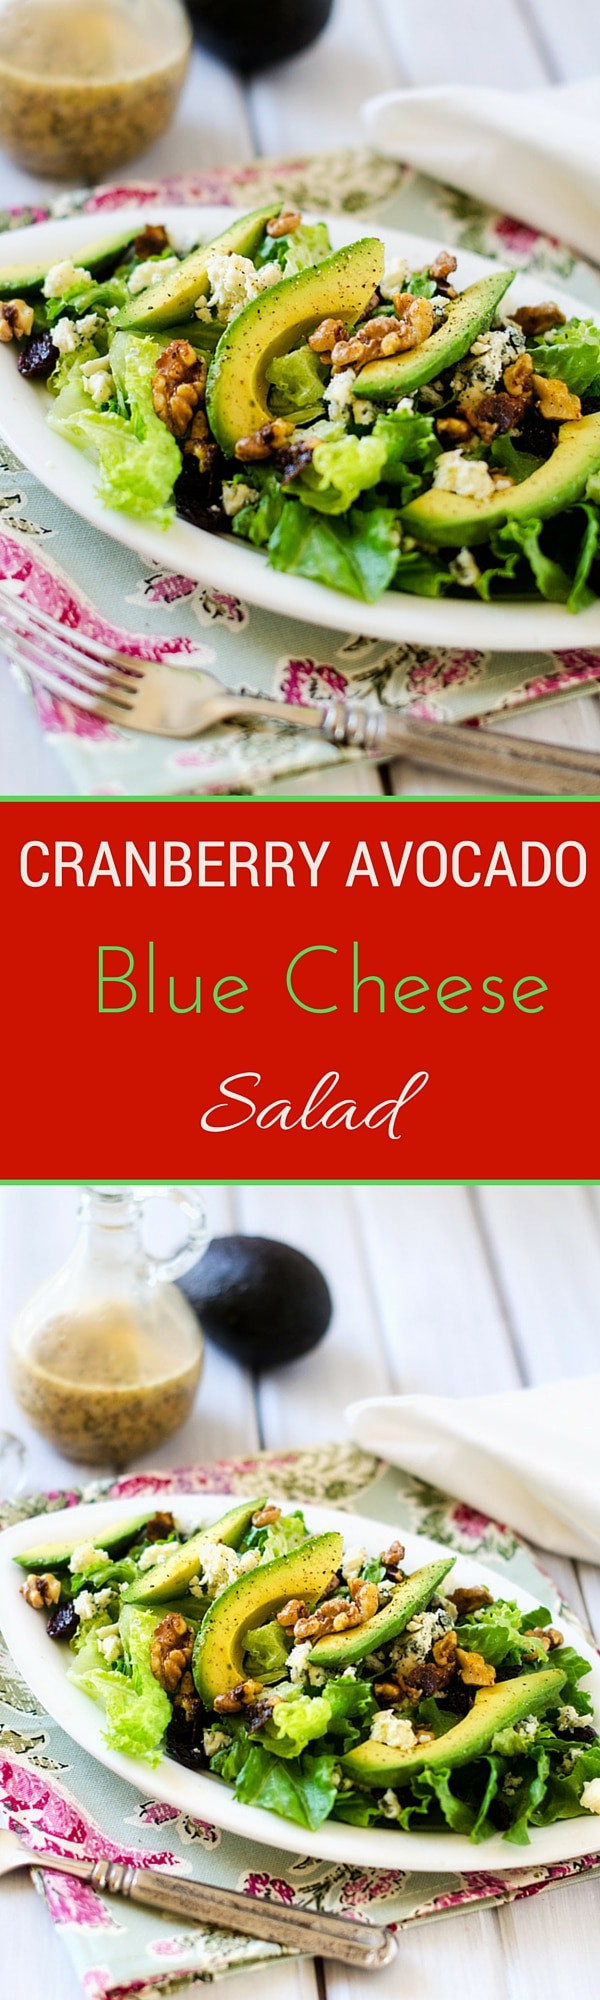 Cranberry Avocado Blue Cheese Salad